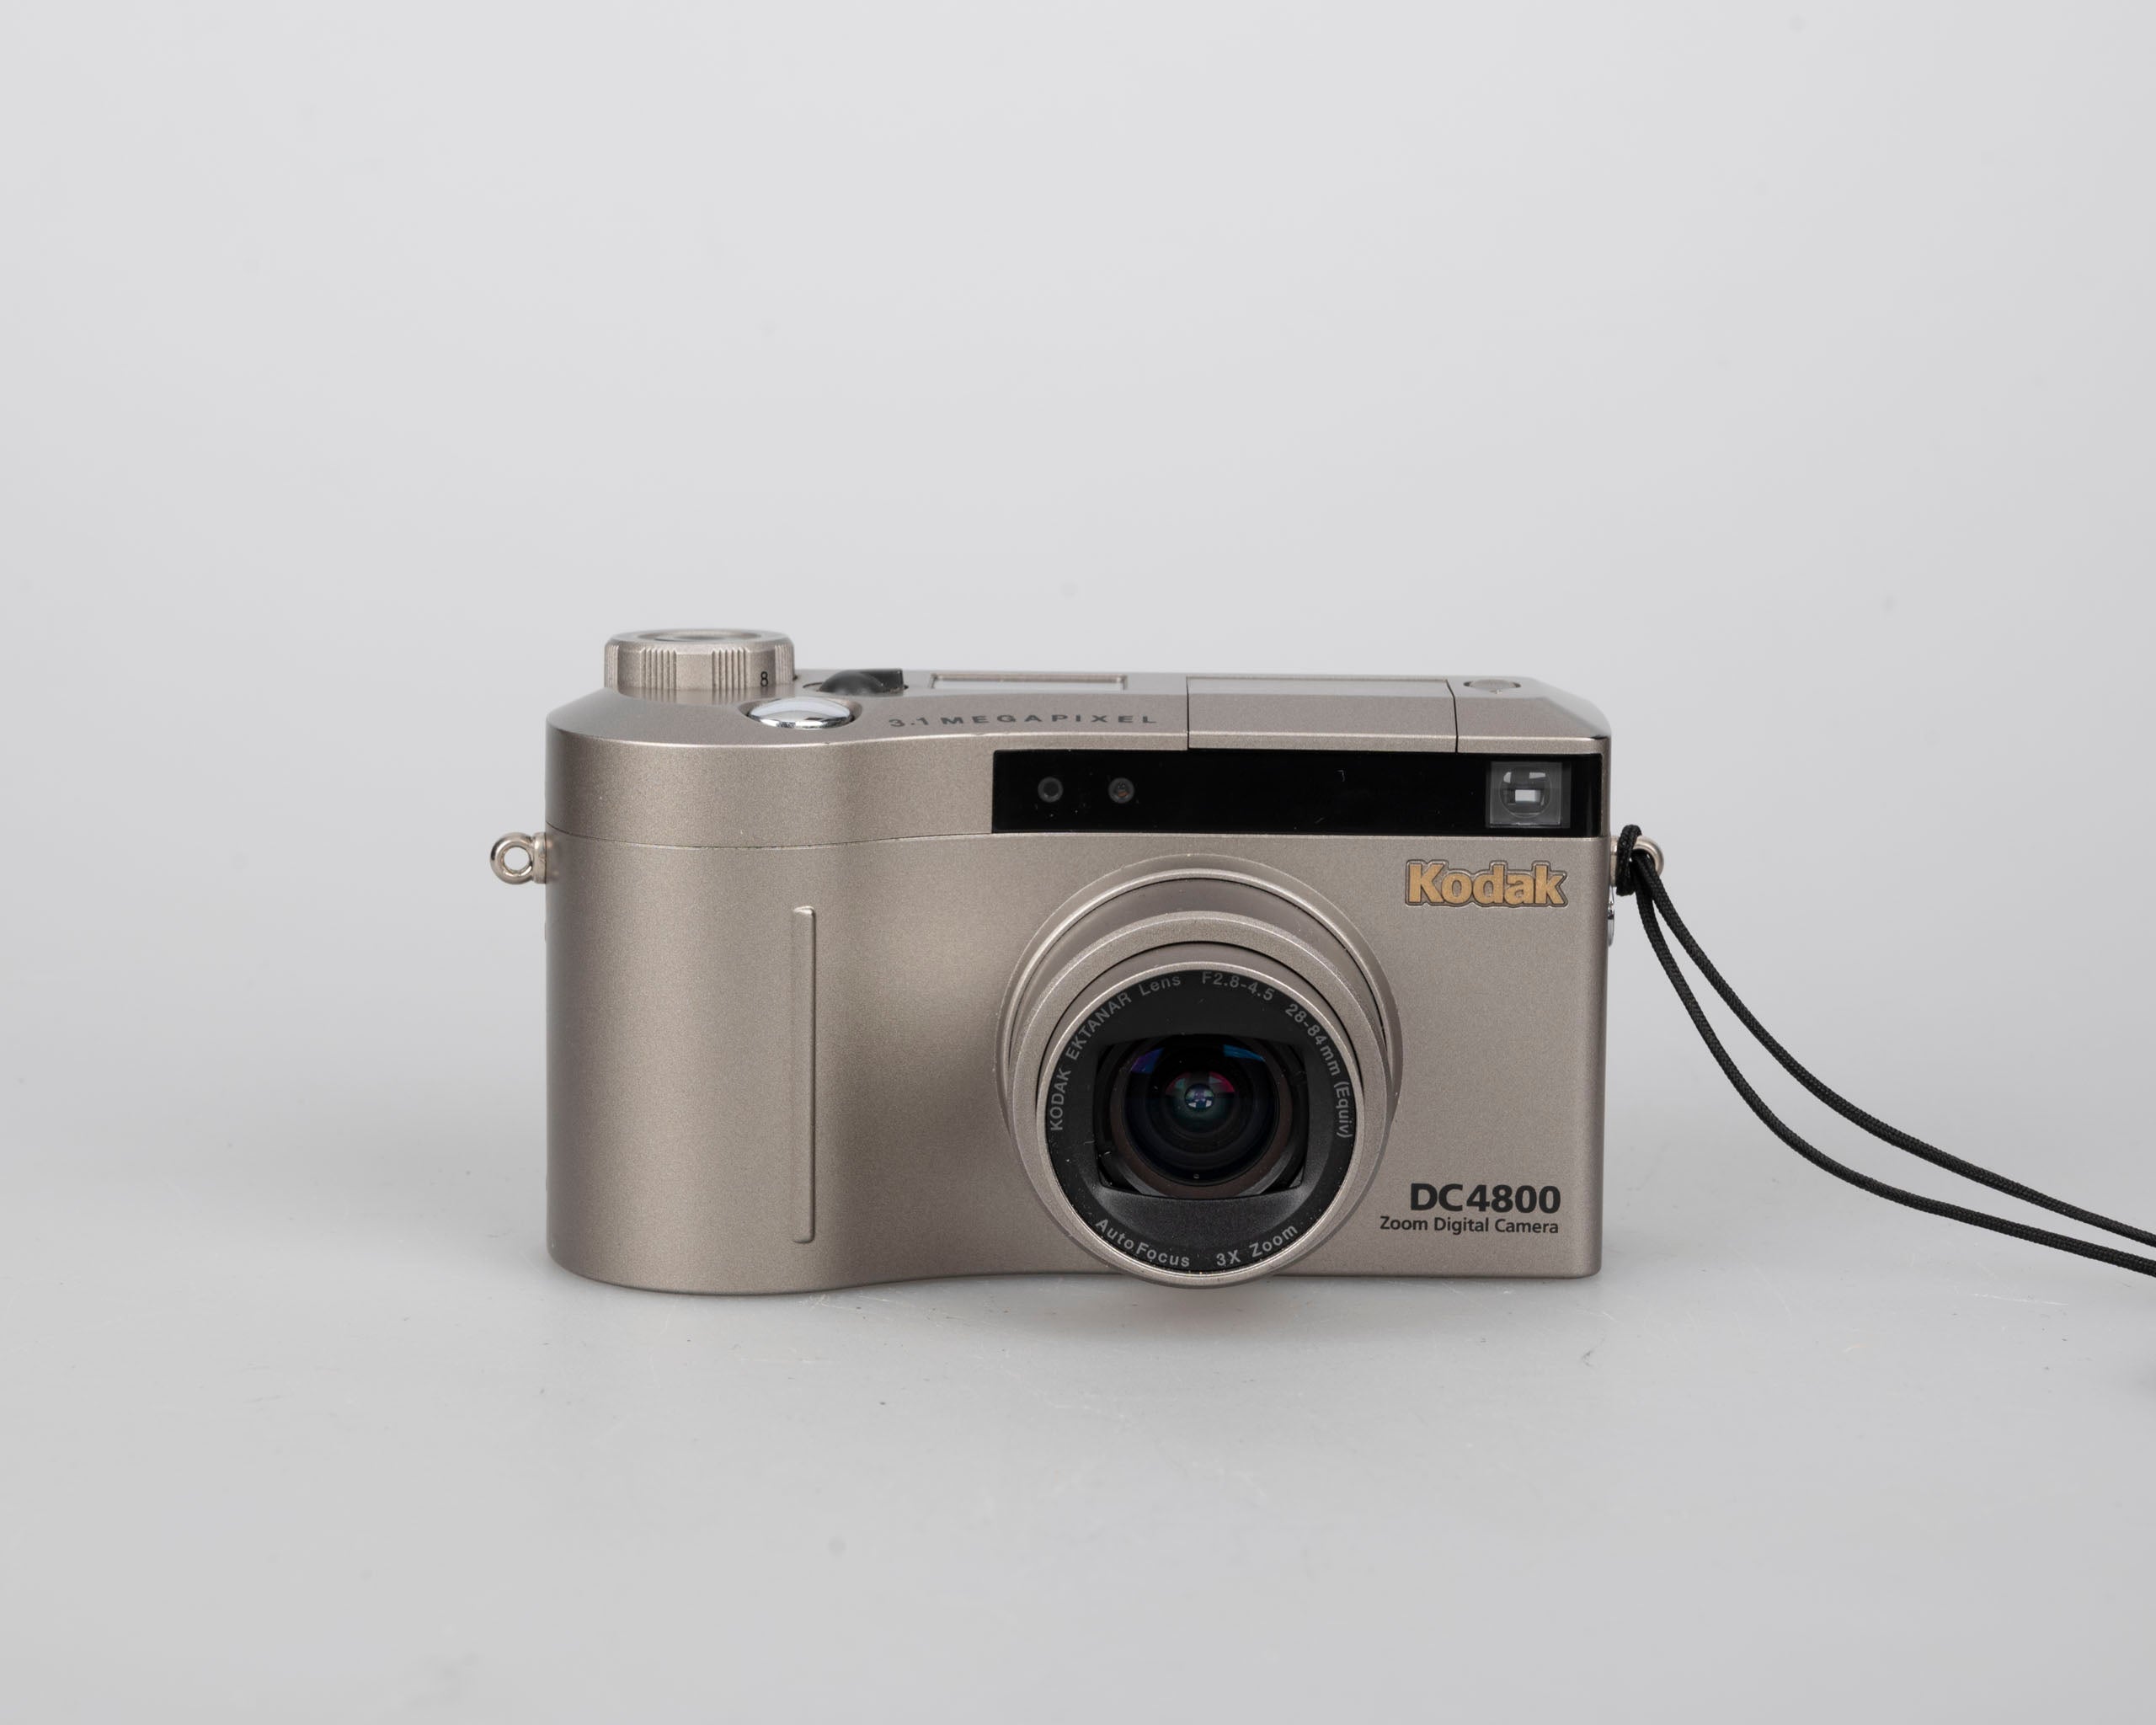 Kodak DC4800 Zoom Digital Camera - デジタルカメラ